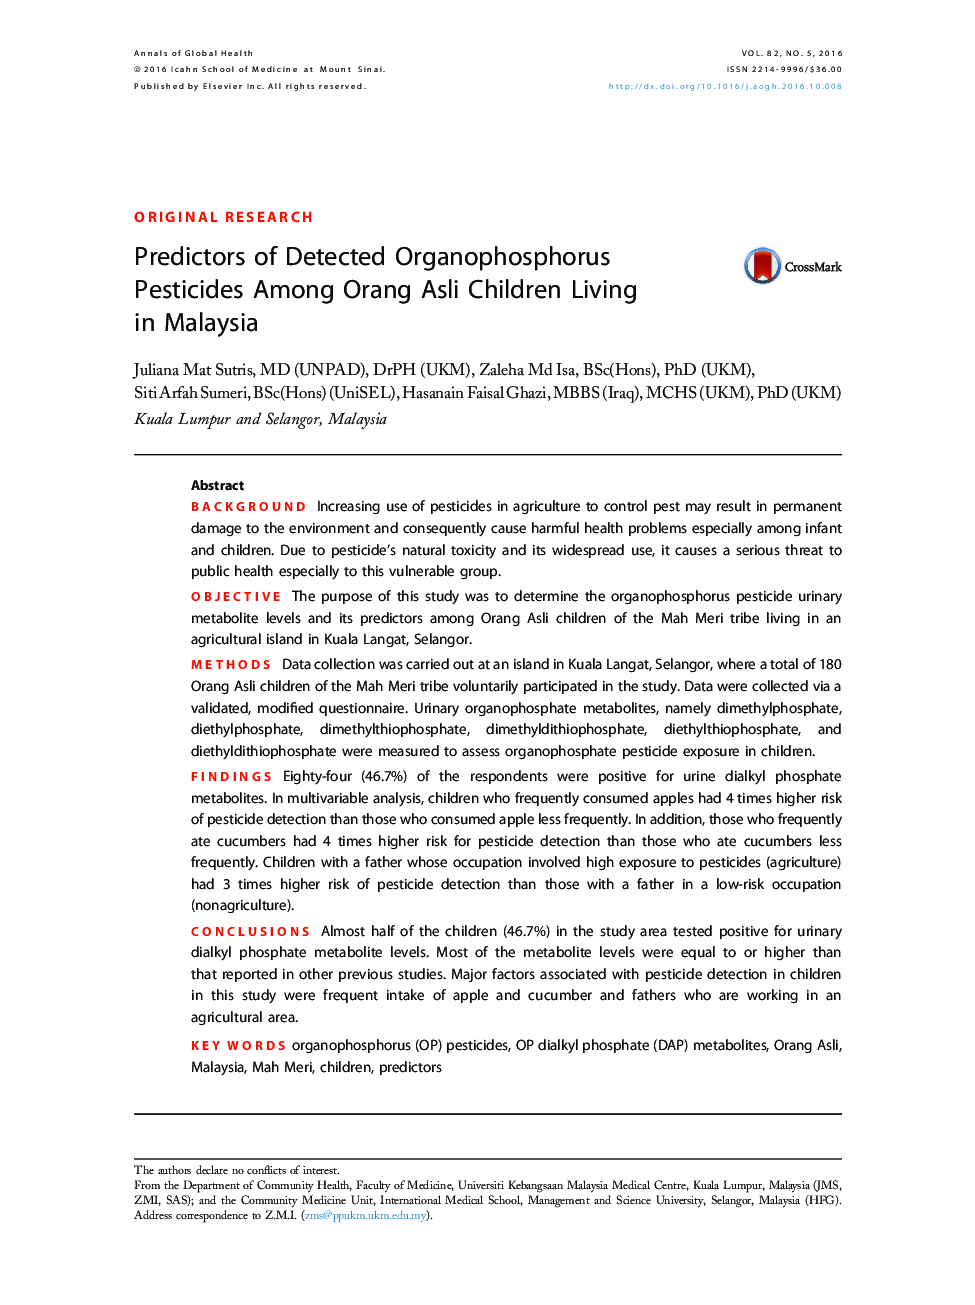 Predictors of Detected Organophosphorus Pesticides Among Orang Asli Children Living inÂ Malaysia